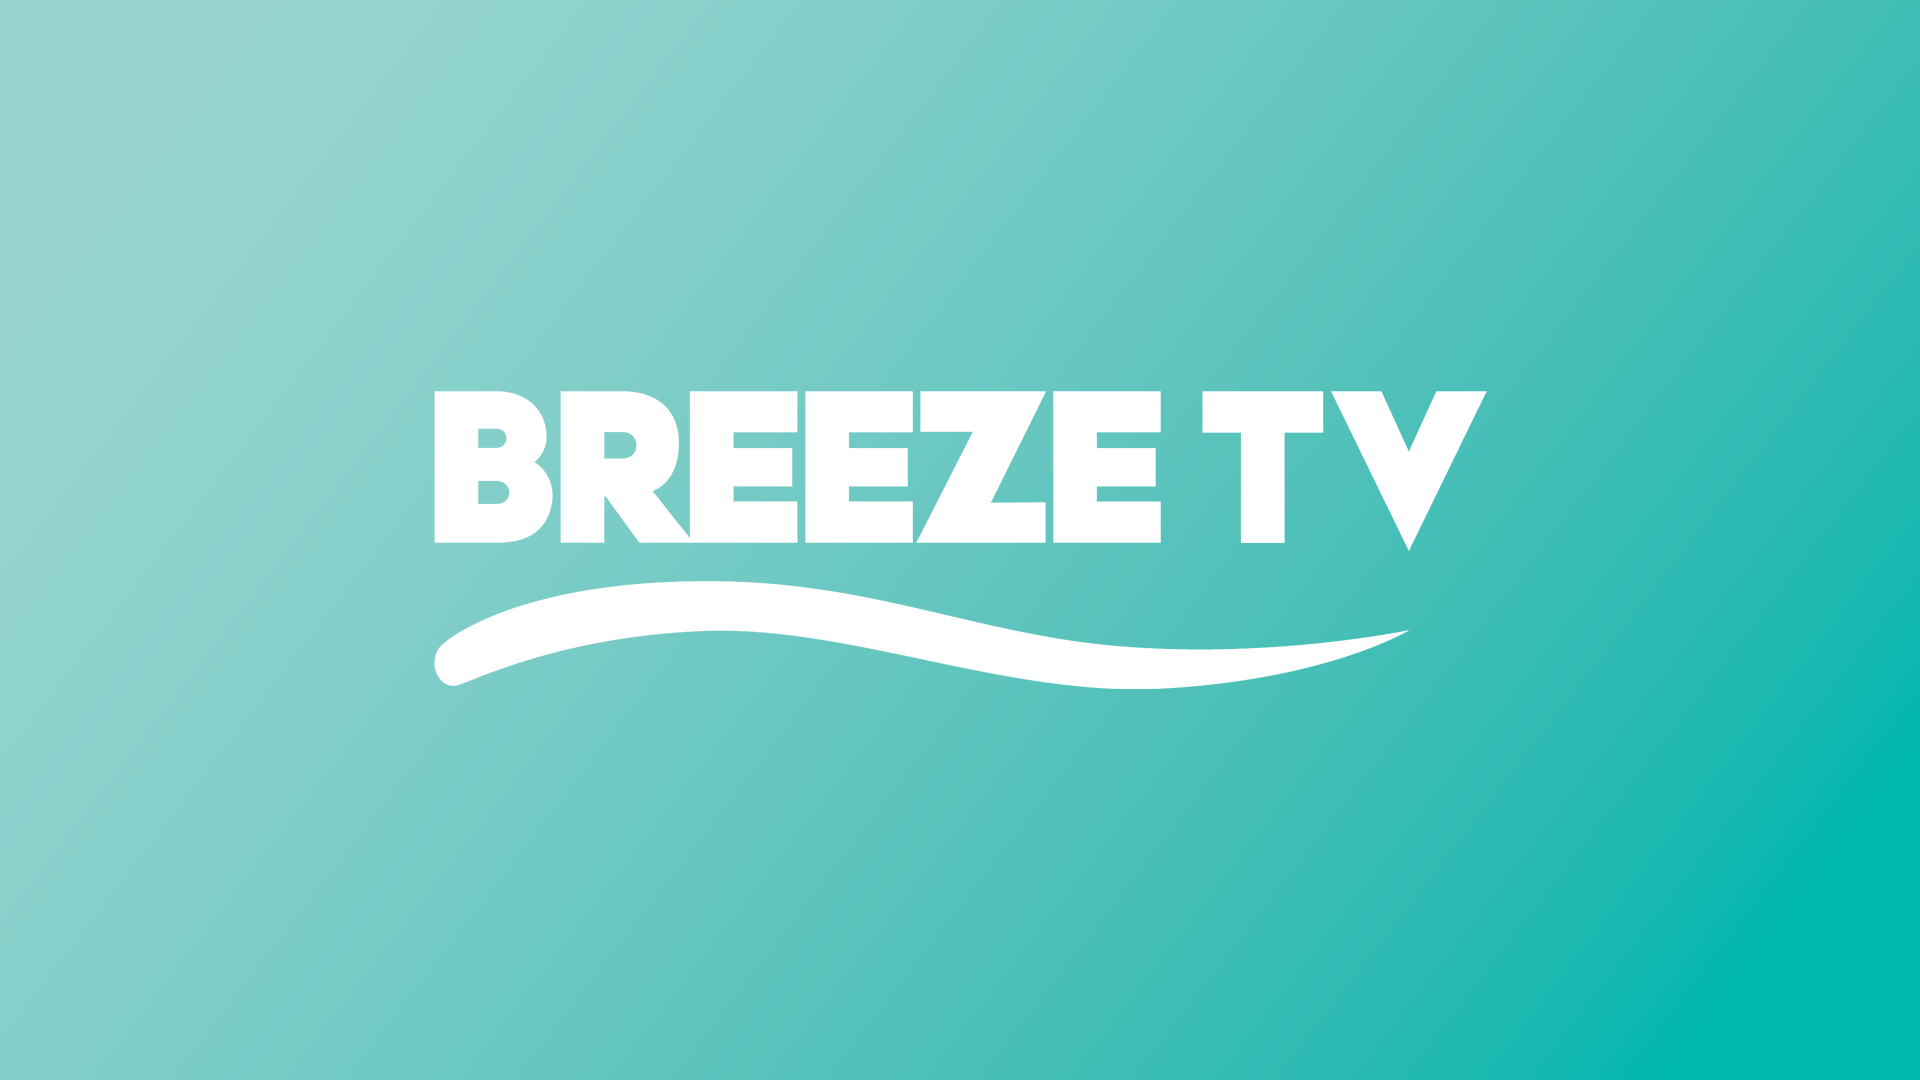 The Breeze TV